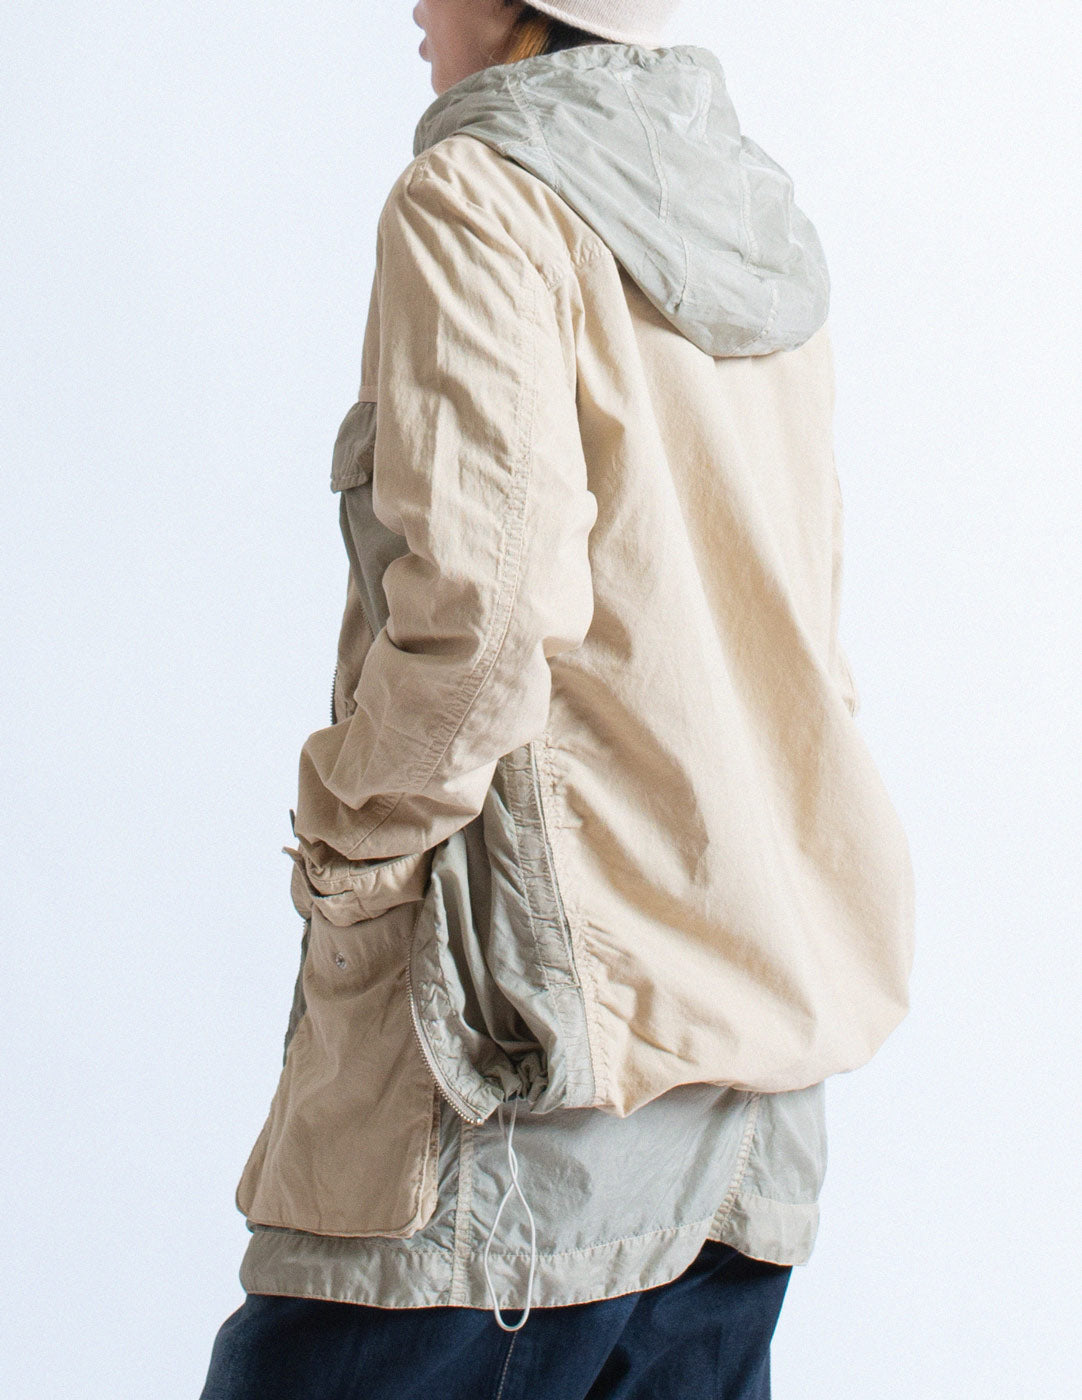 Marithé+François Girbaud layered utility jacket back detail